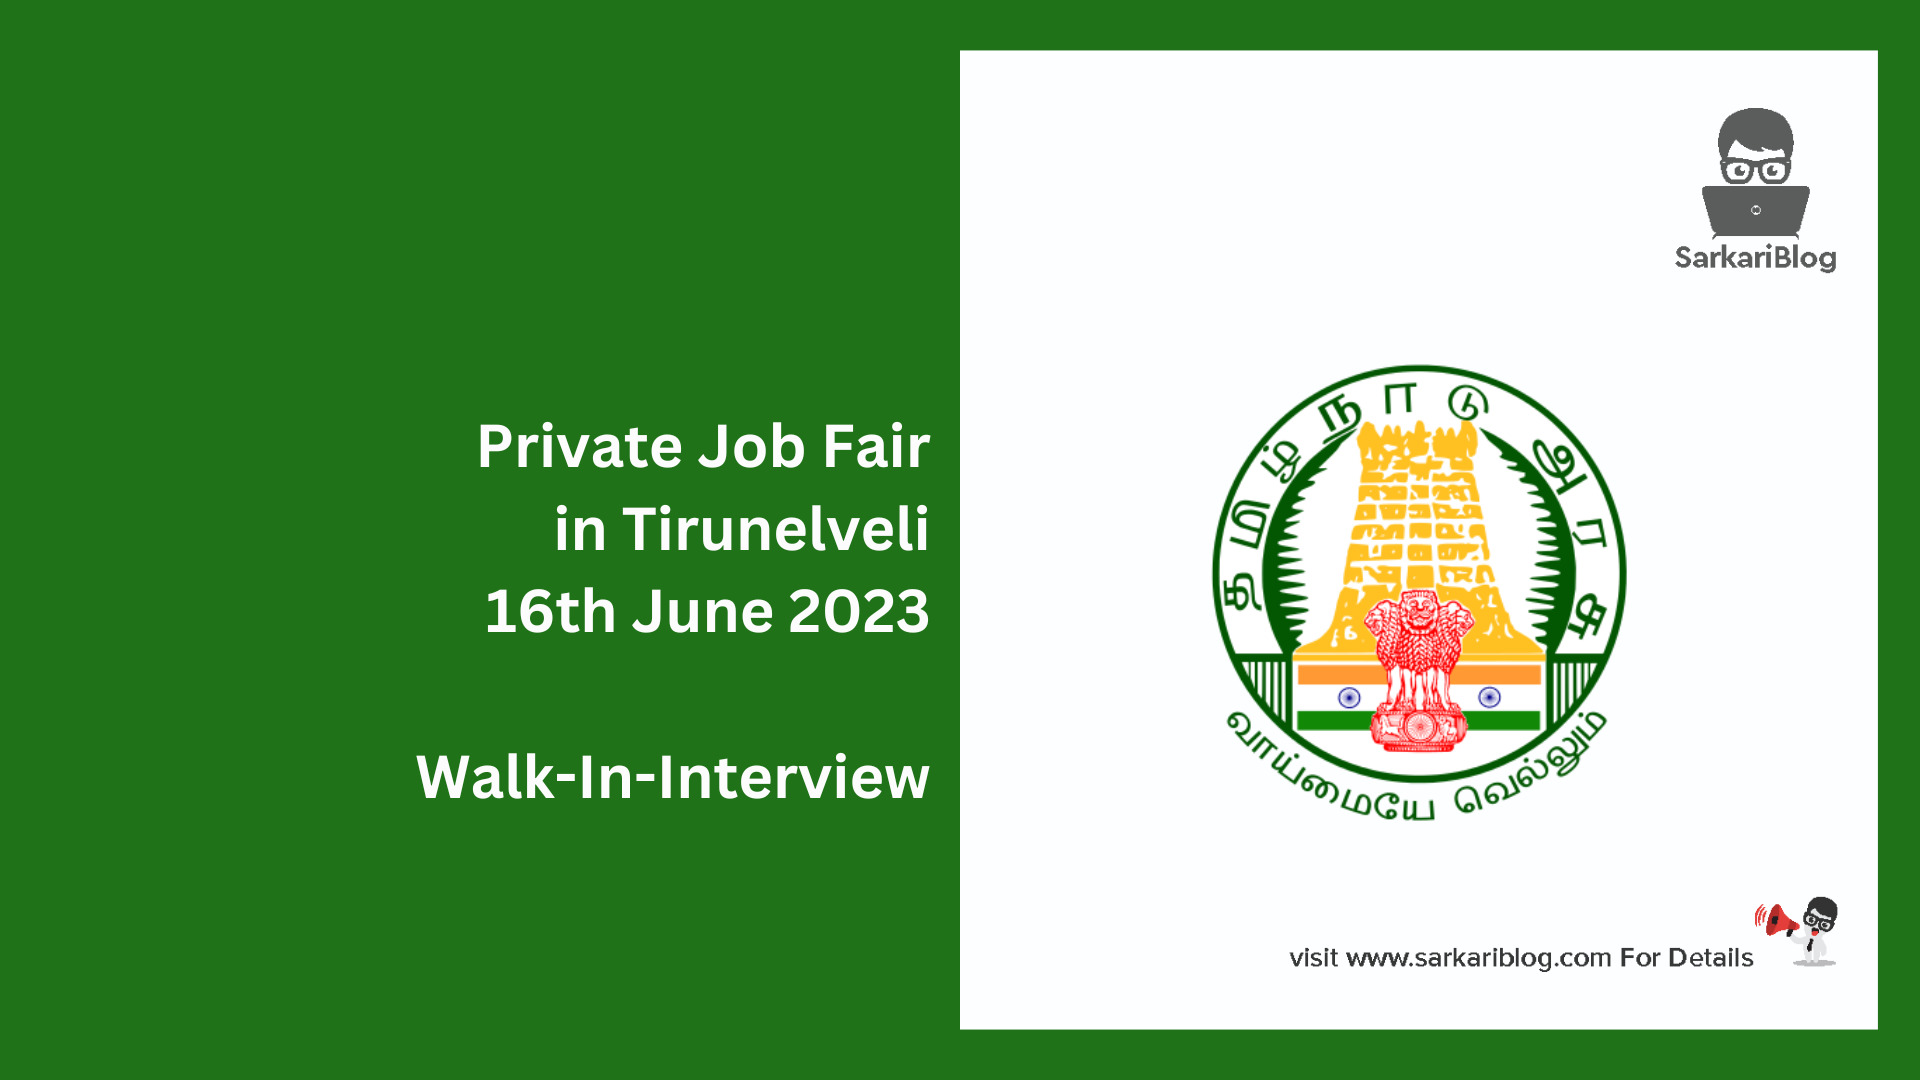 Private Job Fair in Tirunelveli 16th June 2023